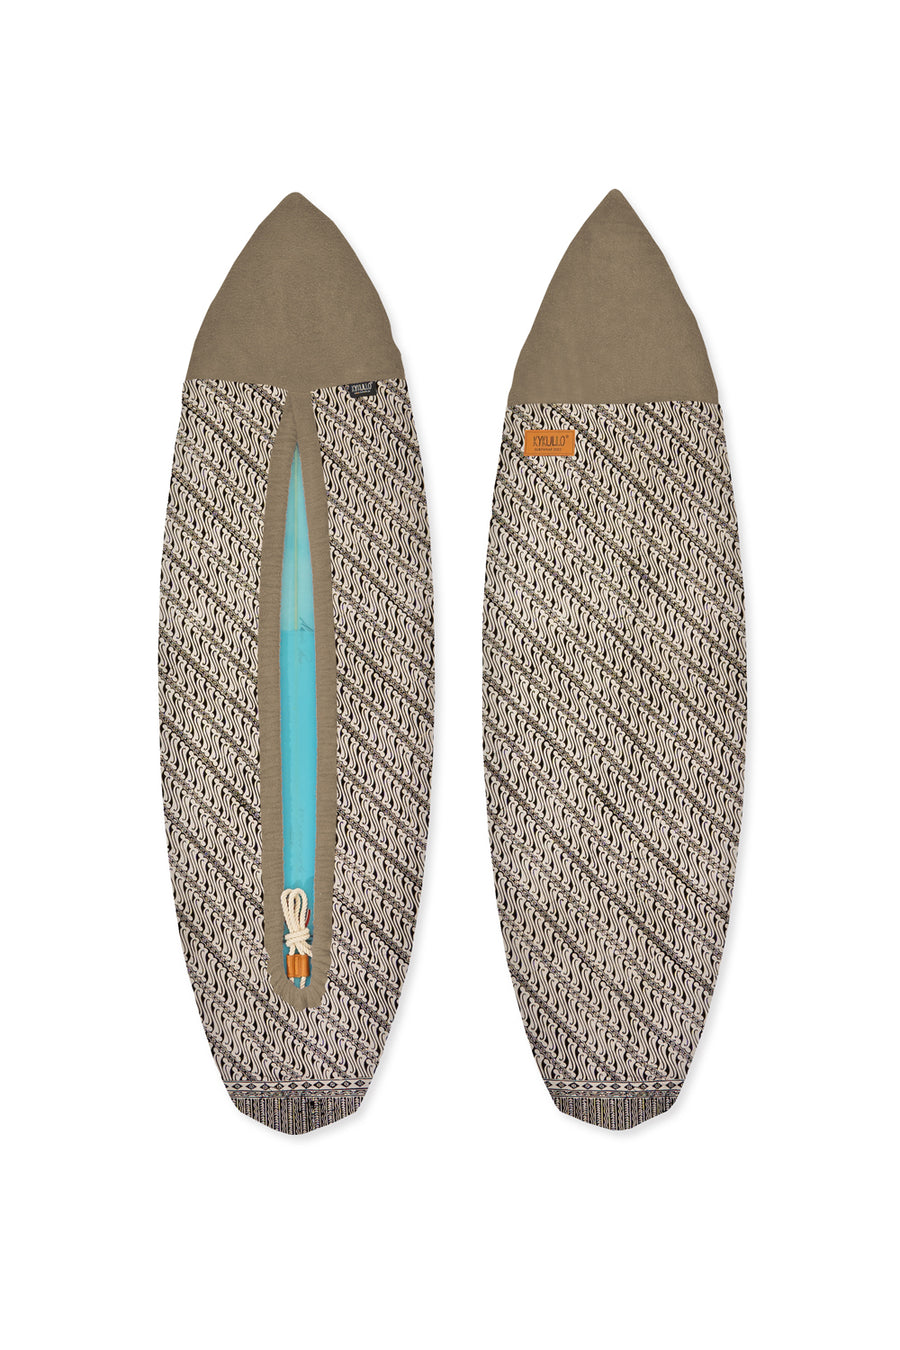 SURFWRAP 5'10 - ALMOND (RETAIL)